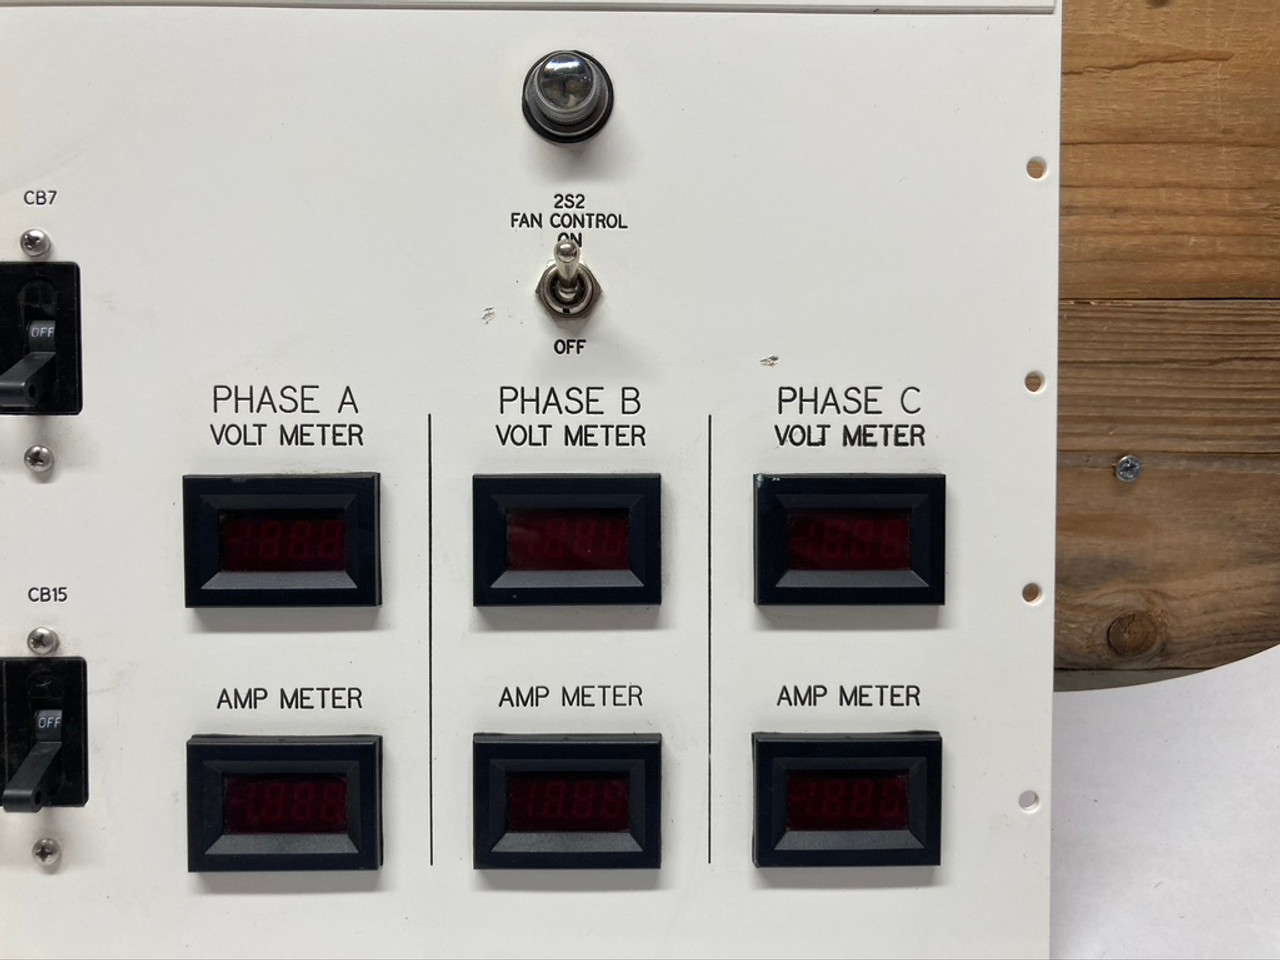 Unit 2 Power Distribution Panel 82A5049B0532-1 EMI Integration